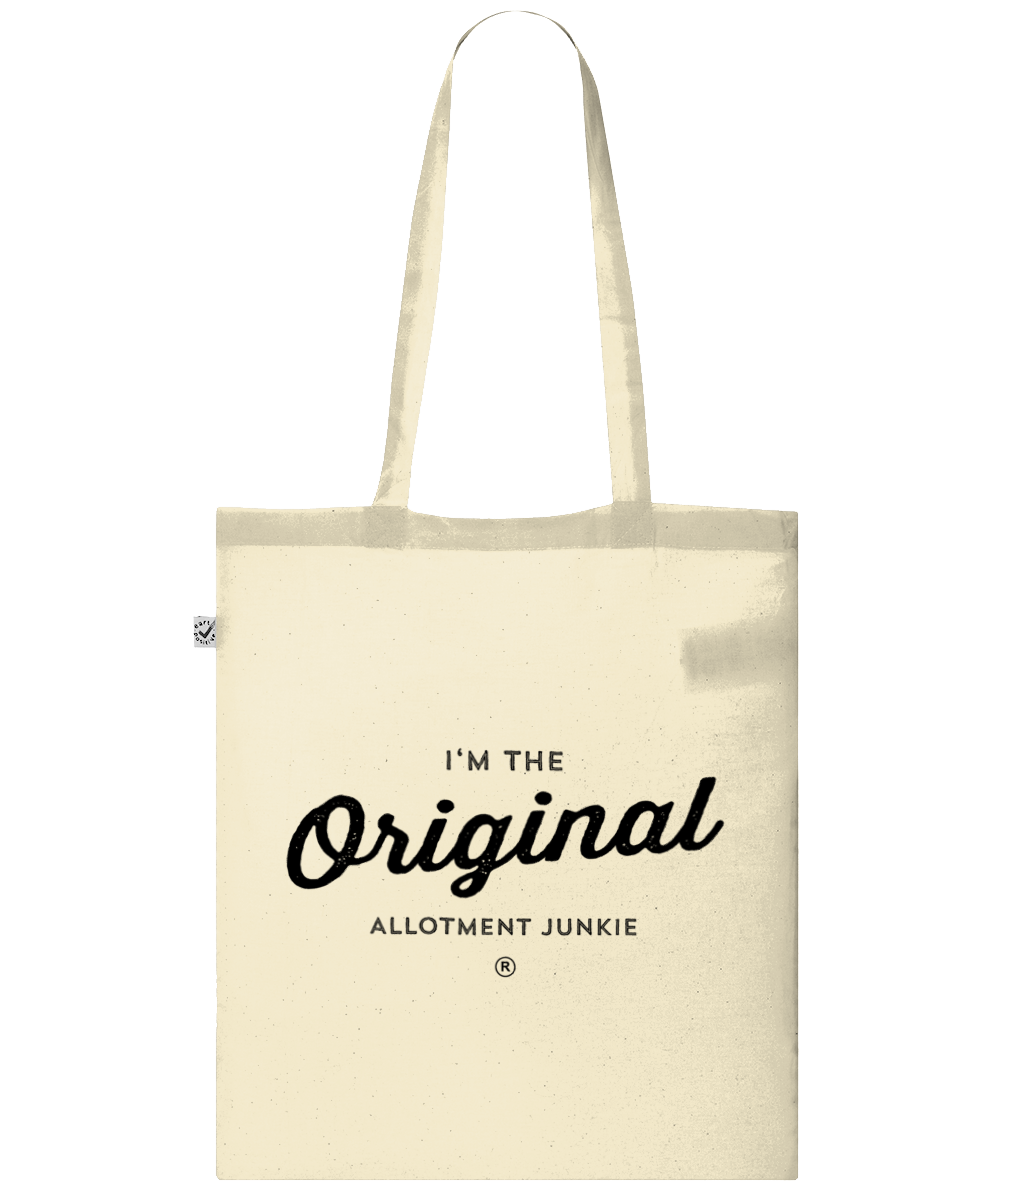 Classic Shopper Tote Bag - Allotment Junkie - Branded: 'I'm the Original'